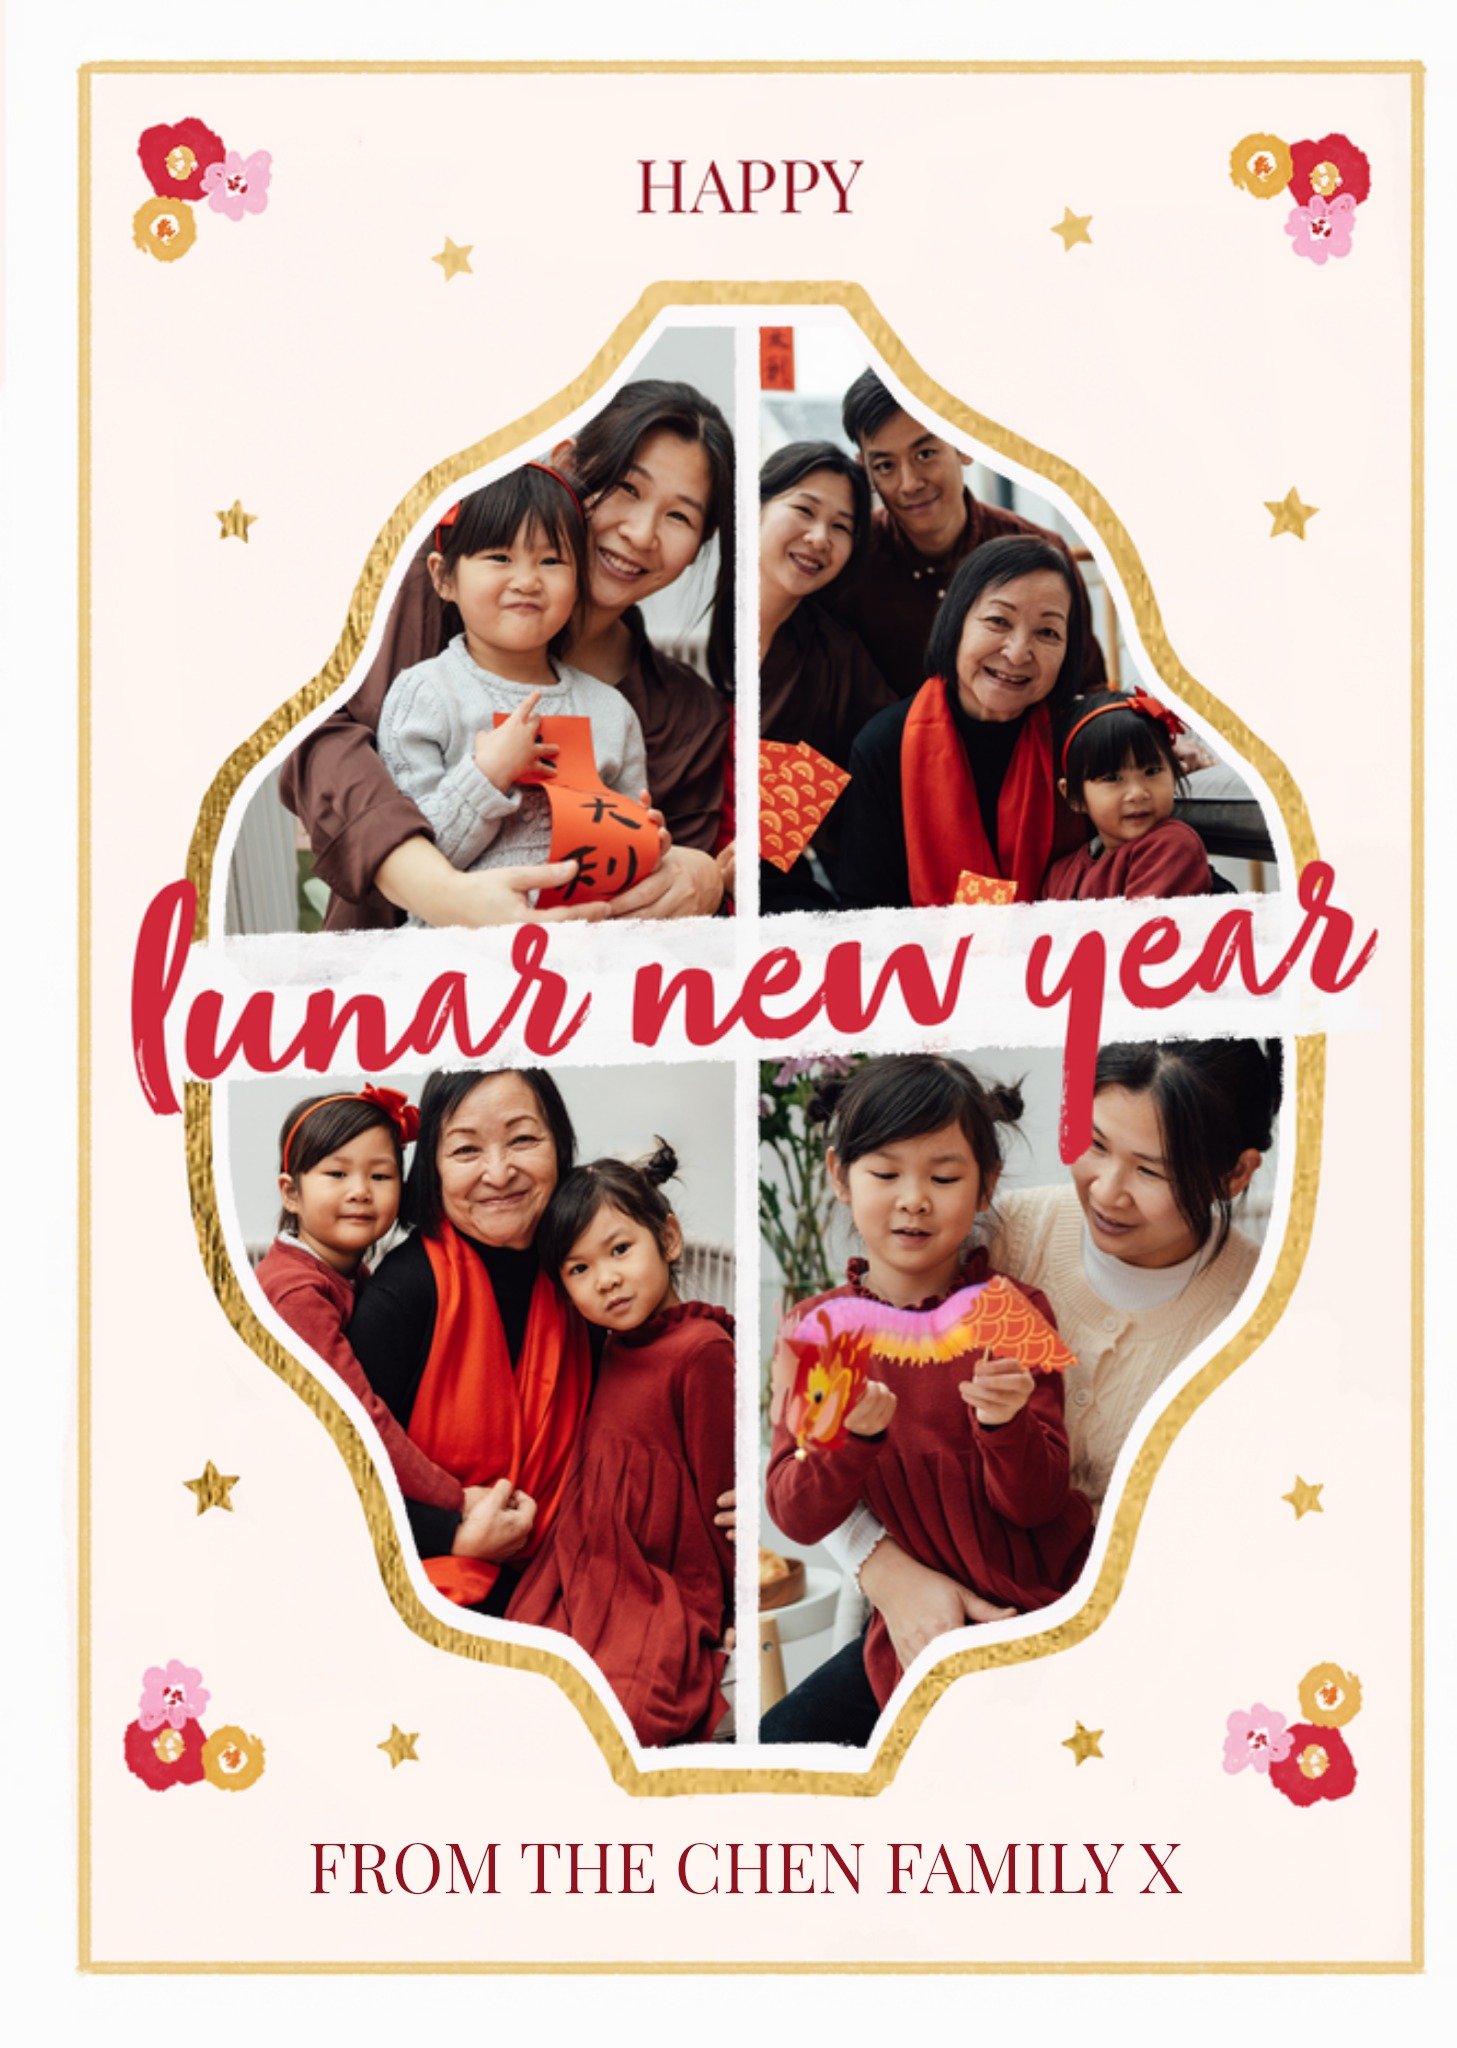 Friends Dreamer Tradition Ornate Frame Photo Upload Lunar New Year Card, Large